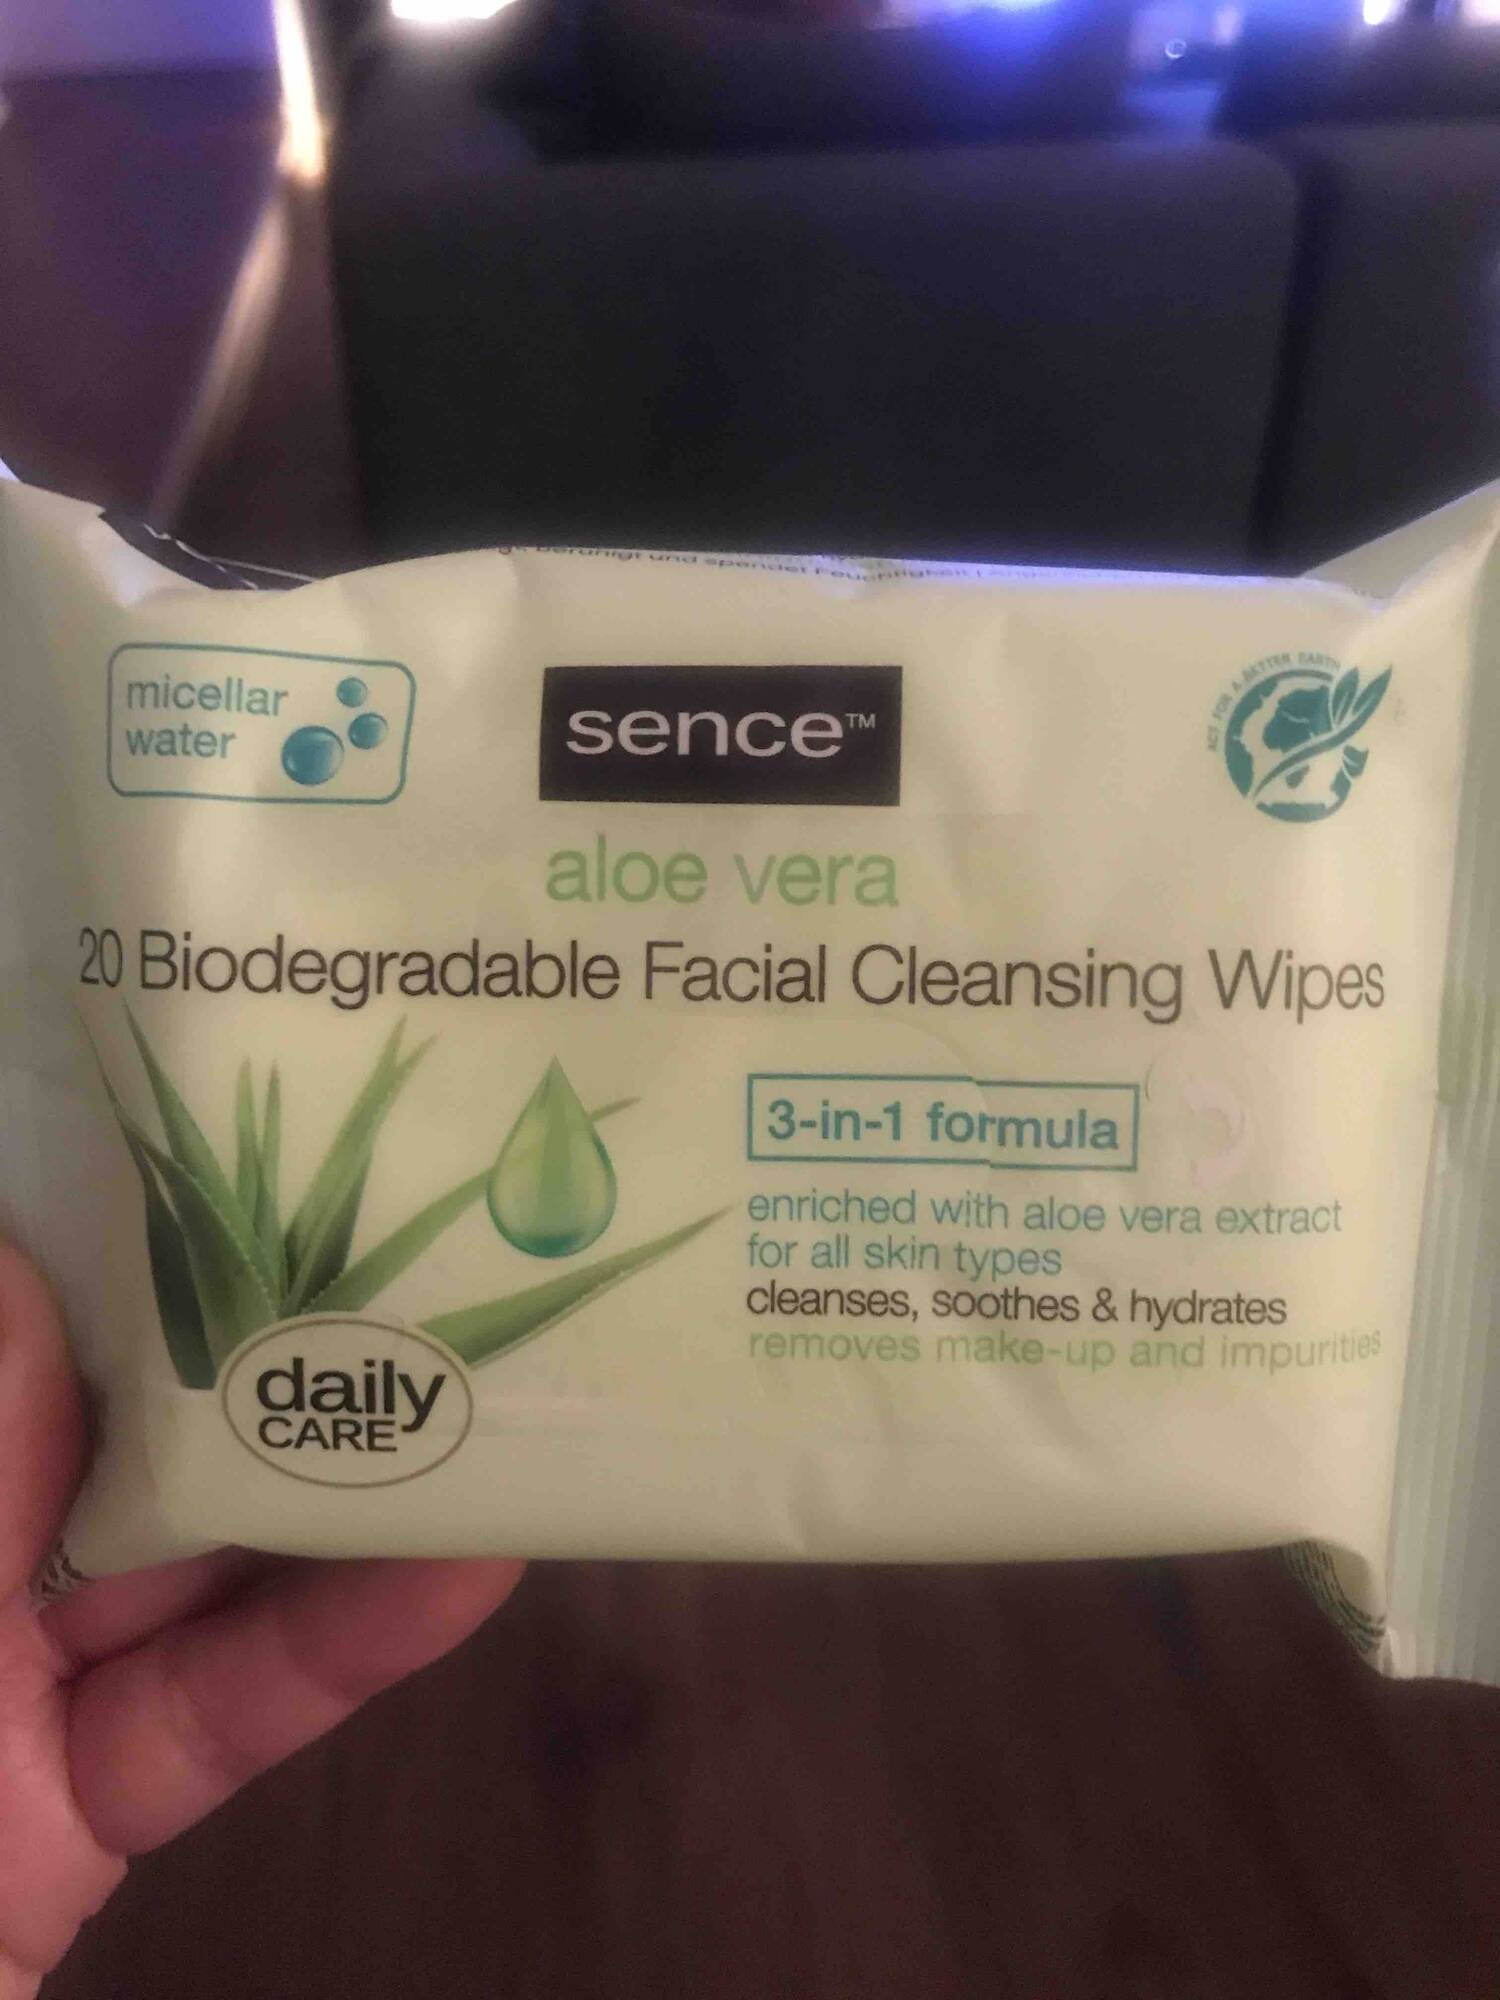 SENCE - Aloe vera 20 biodegradable facial cleansing wipes